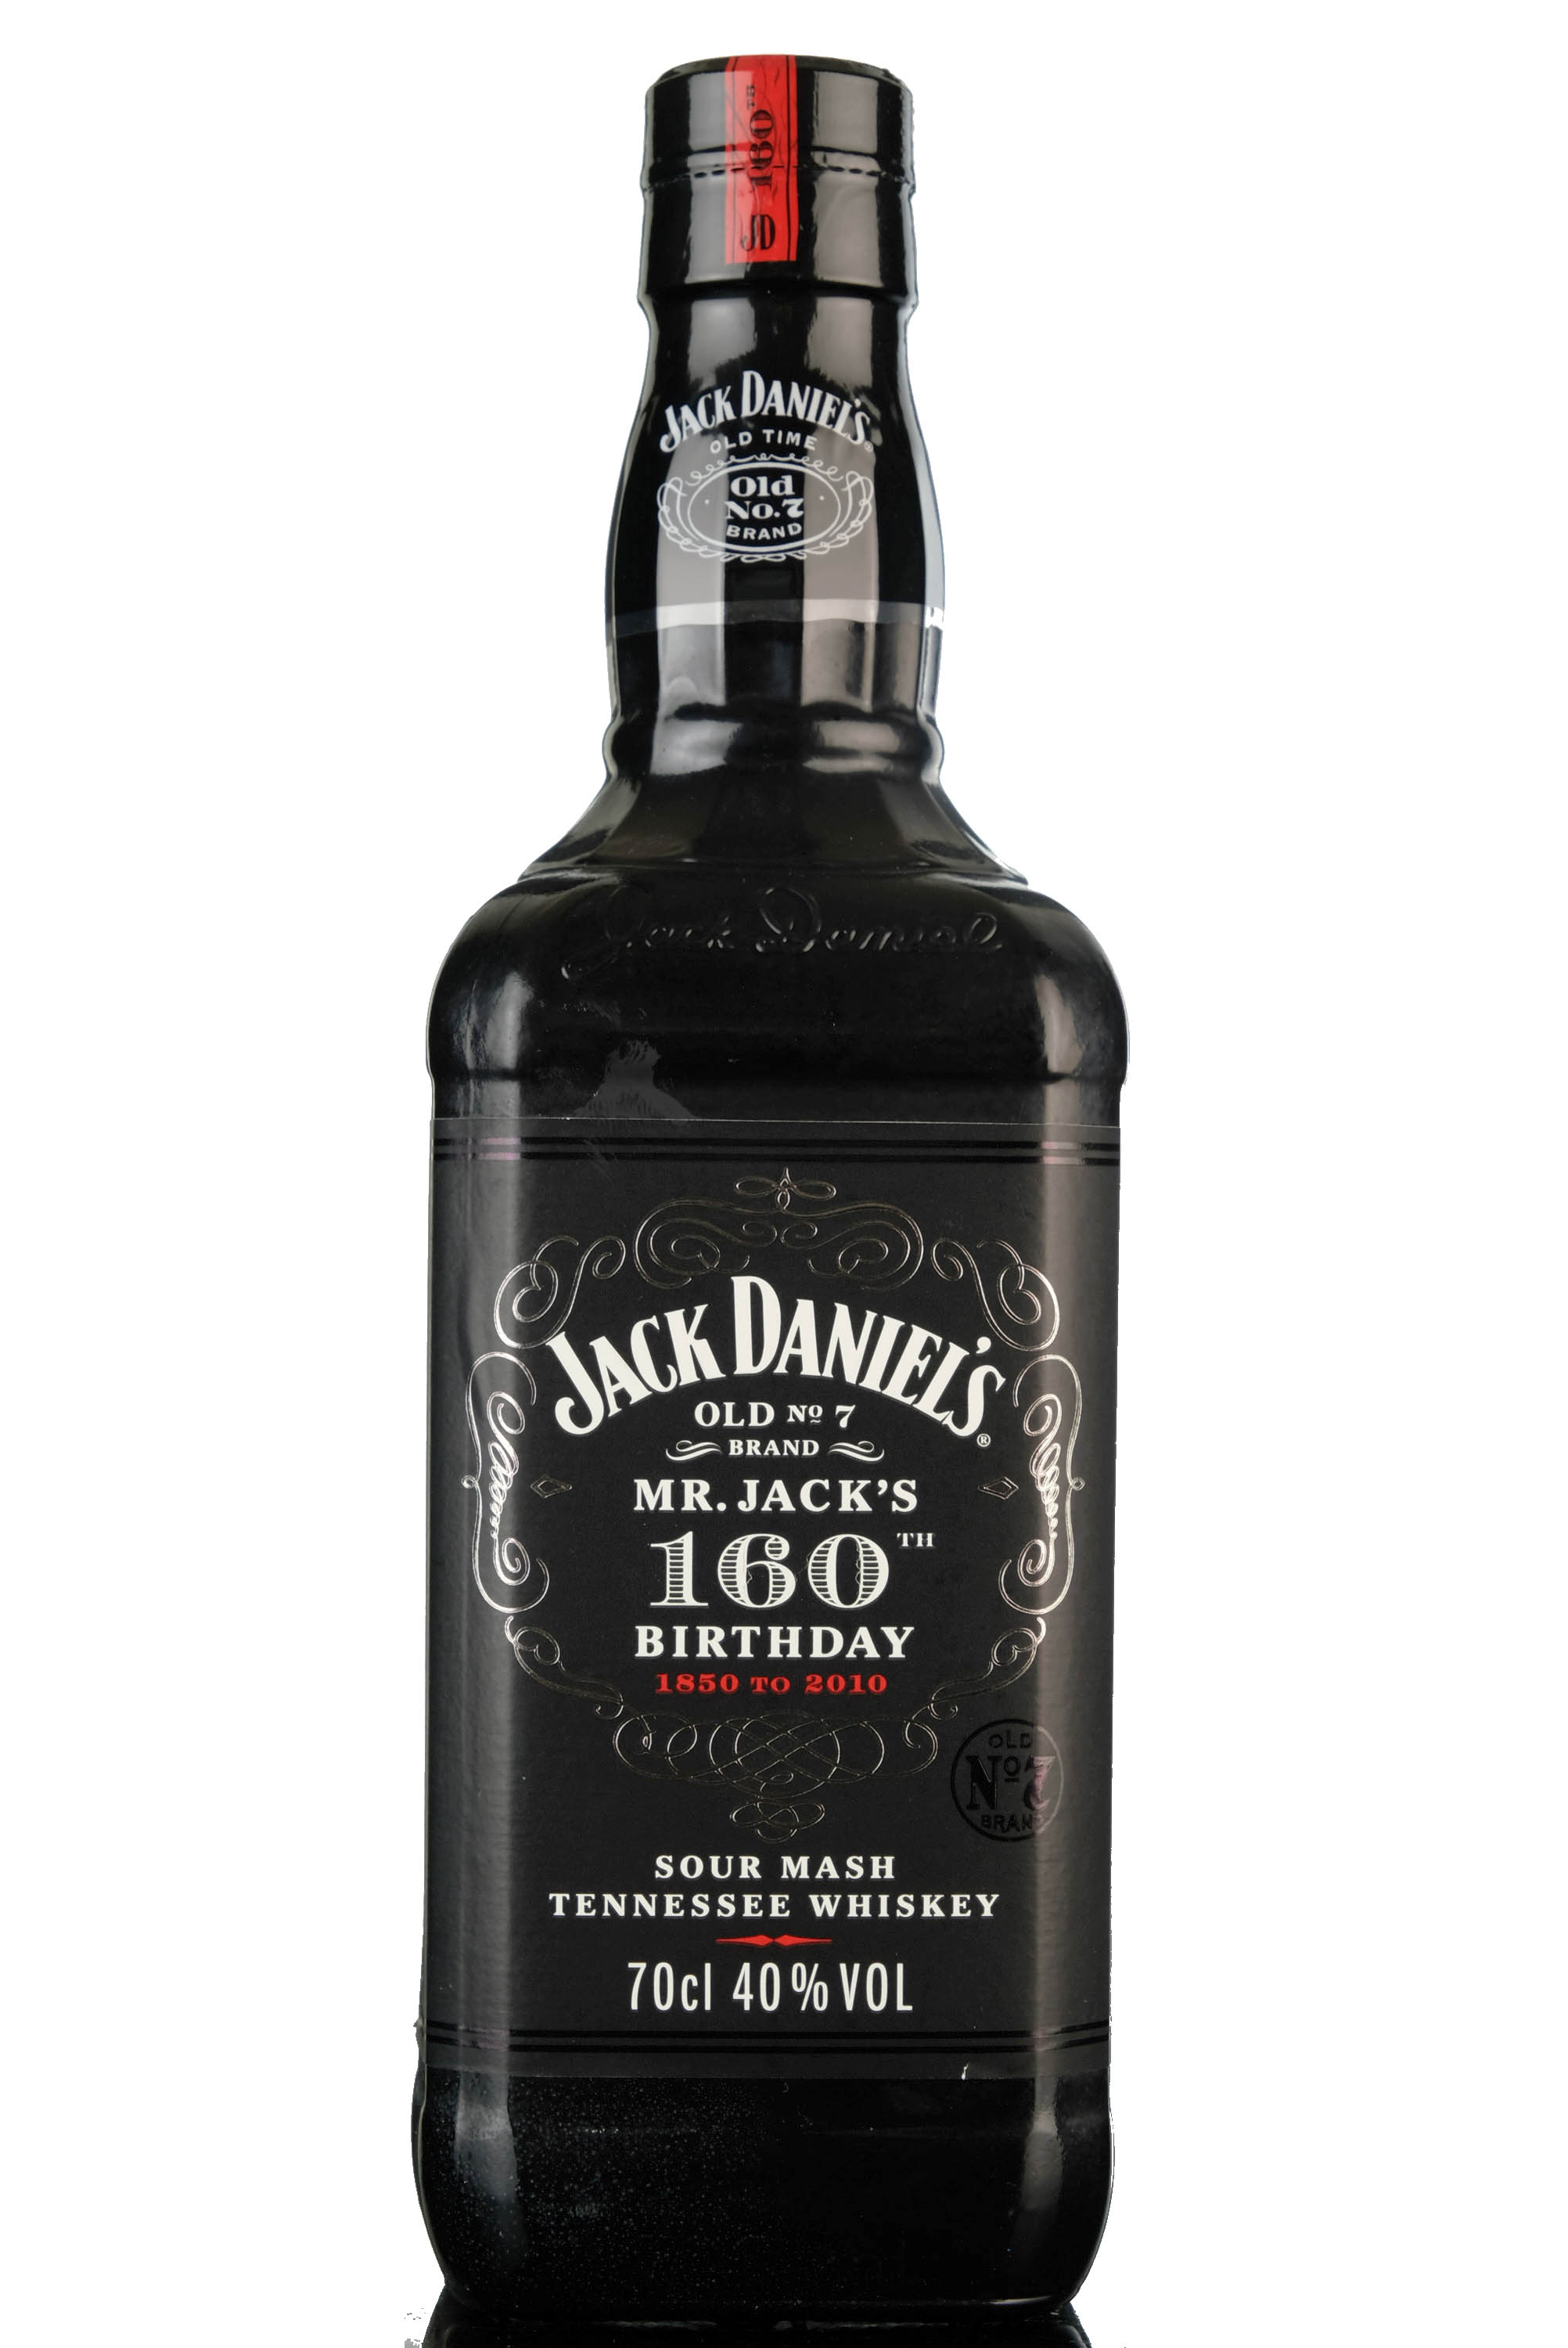 Jack Daniels 160th Birthday